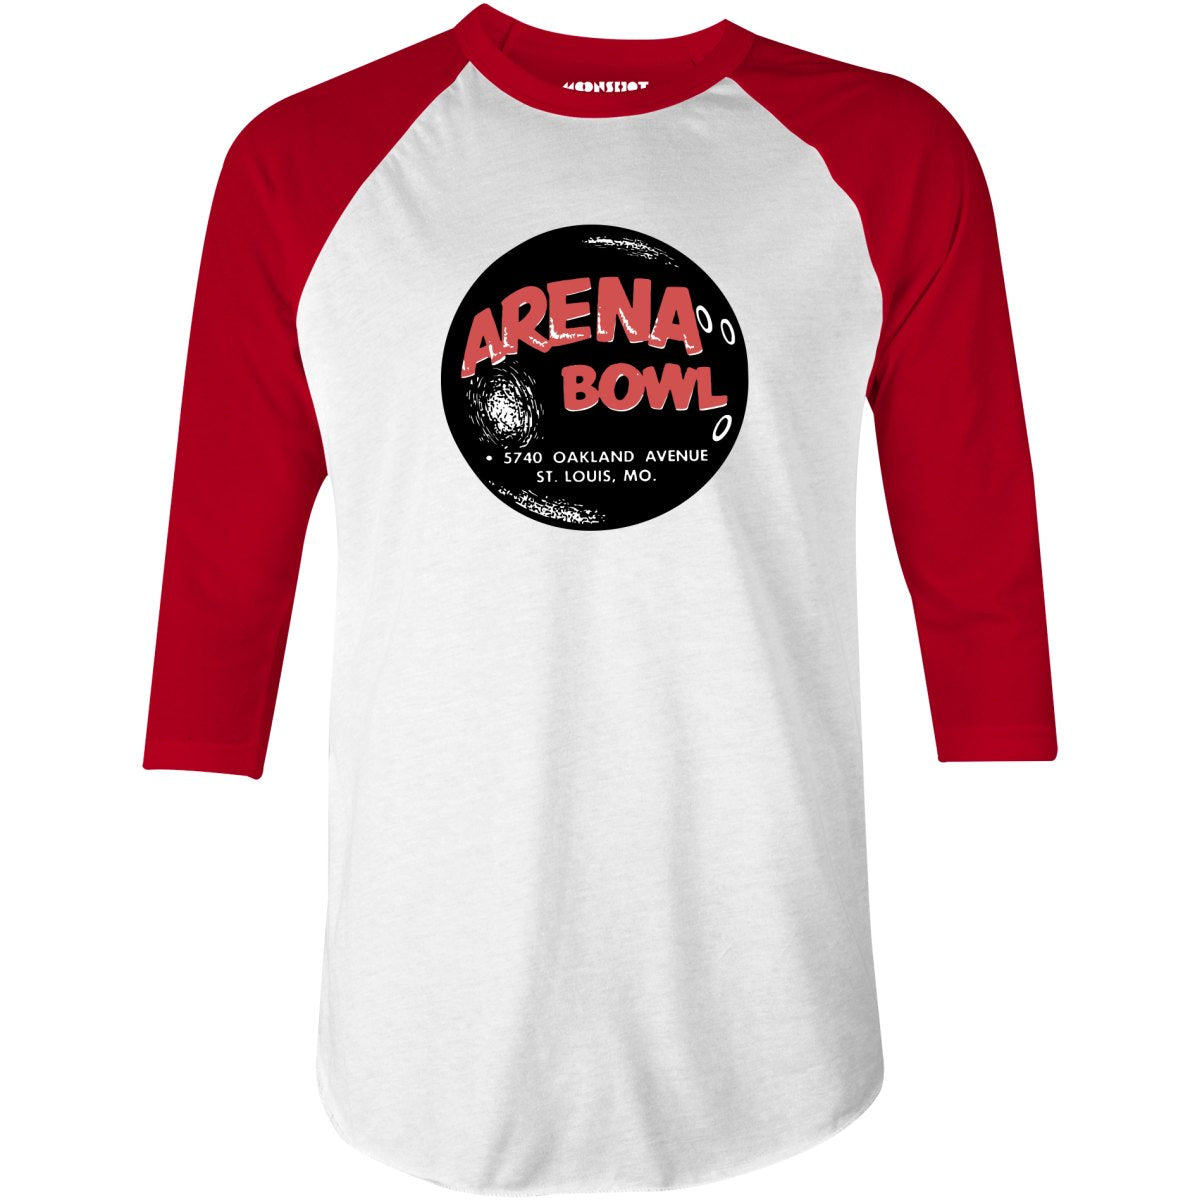 Arena Bowl - St. Louis, MO - Vintage Bowling Alley - 3/4 Sleeve Raglan T-Shirt